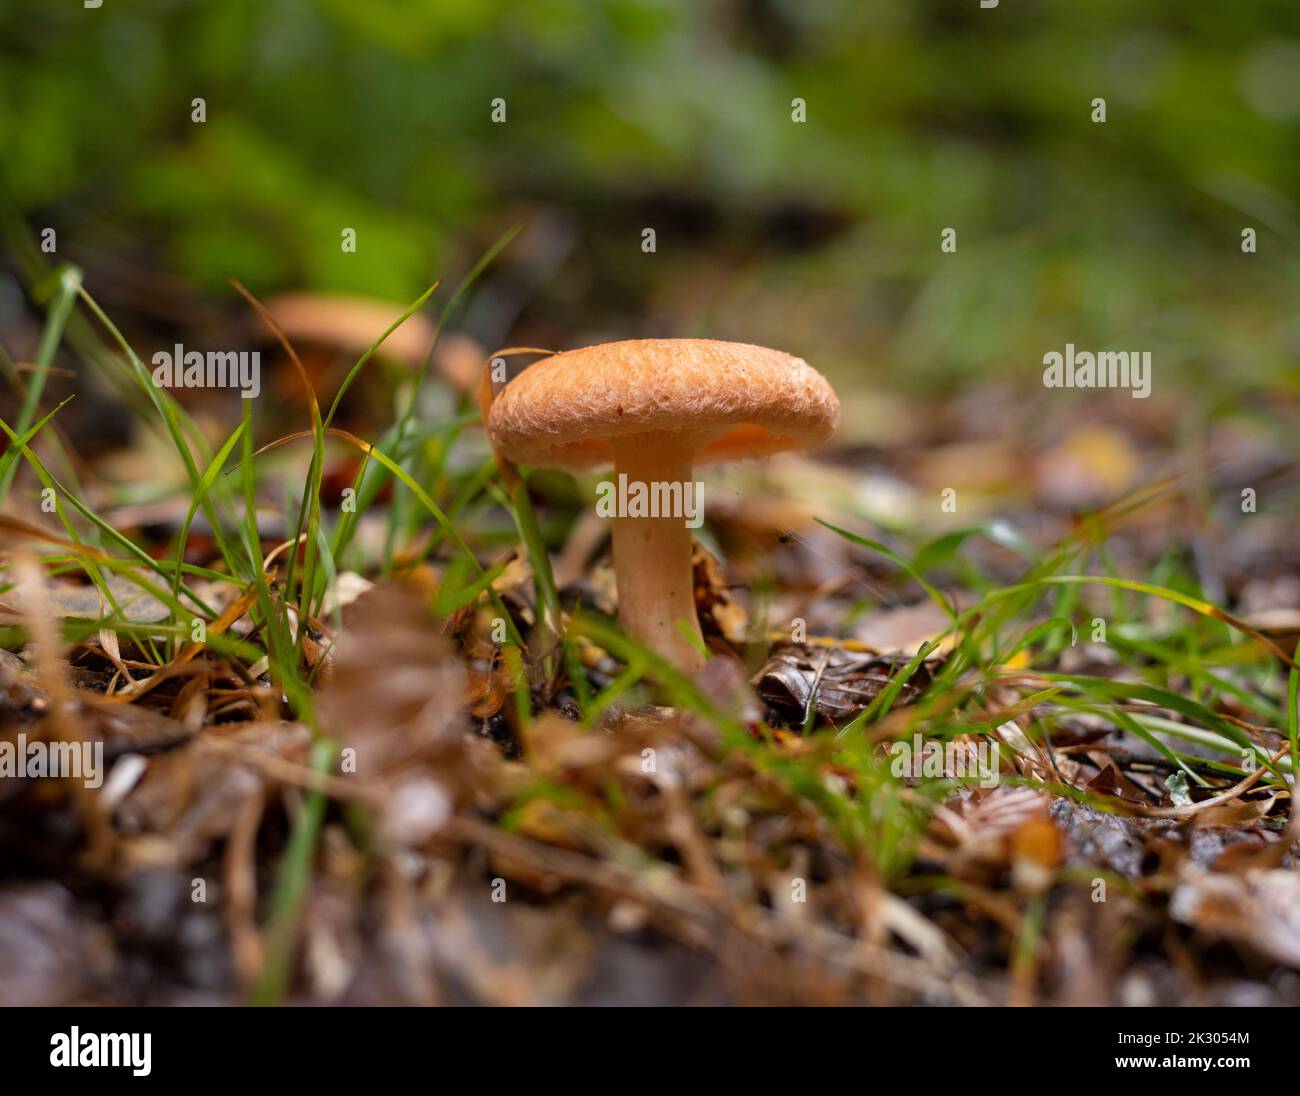 Saffron milk cap mushroom growing on the forest floor in early autumn Stock Photo